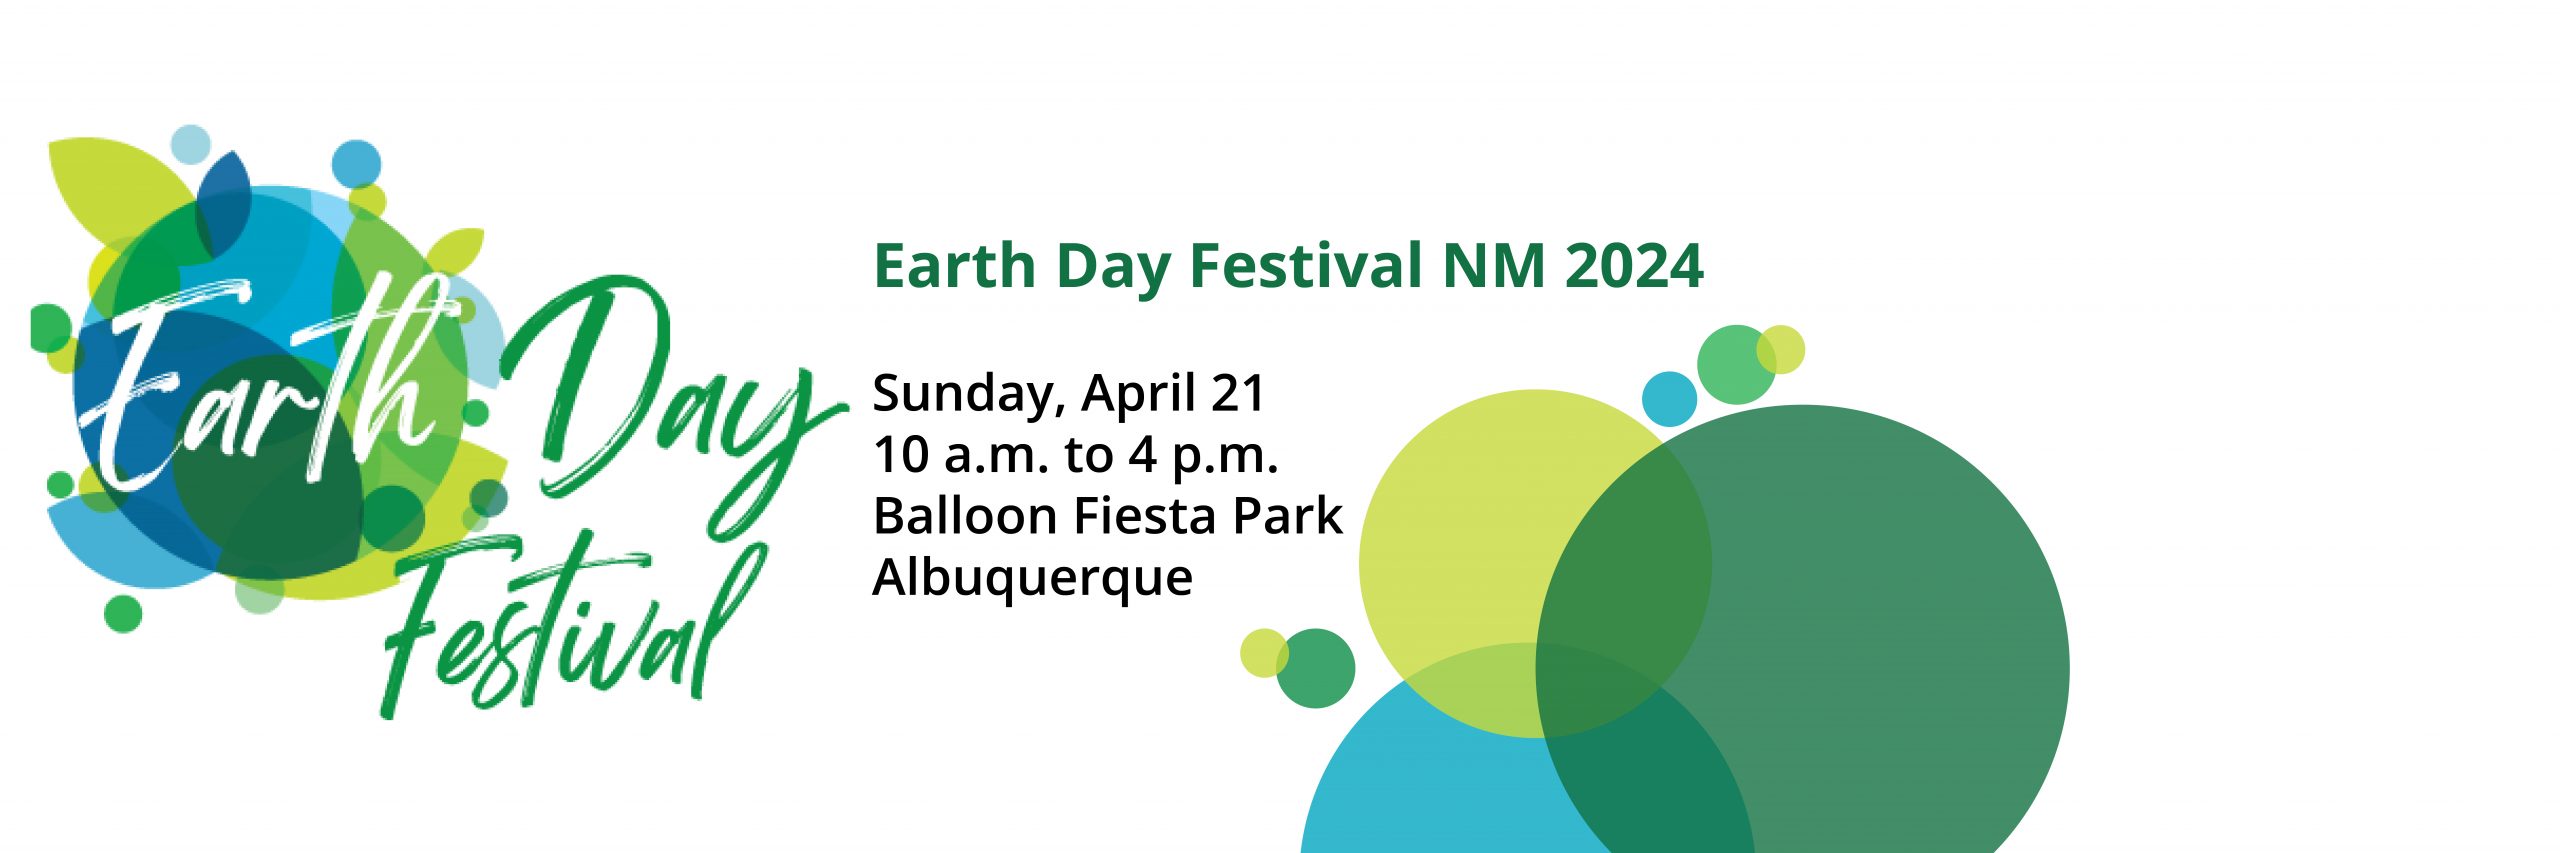 Earth Day Festival NM logo